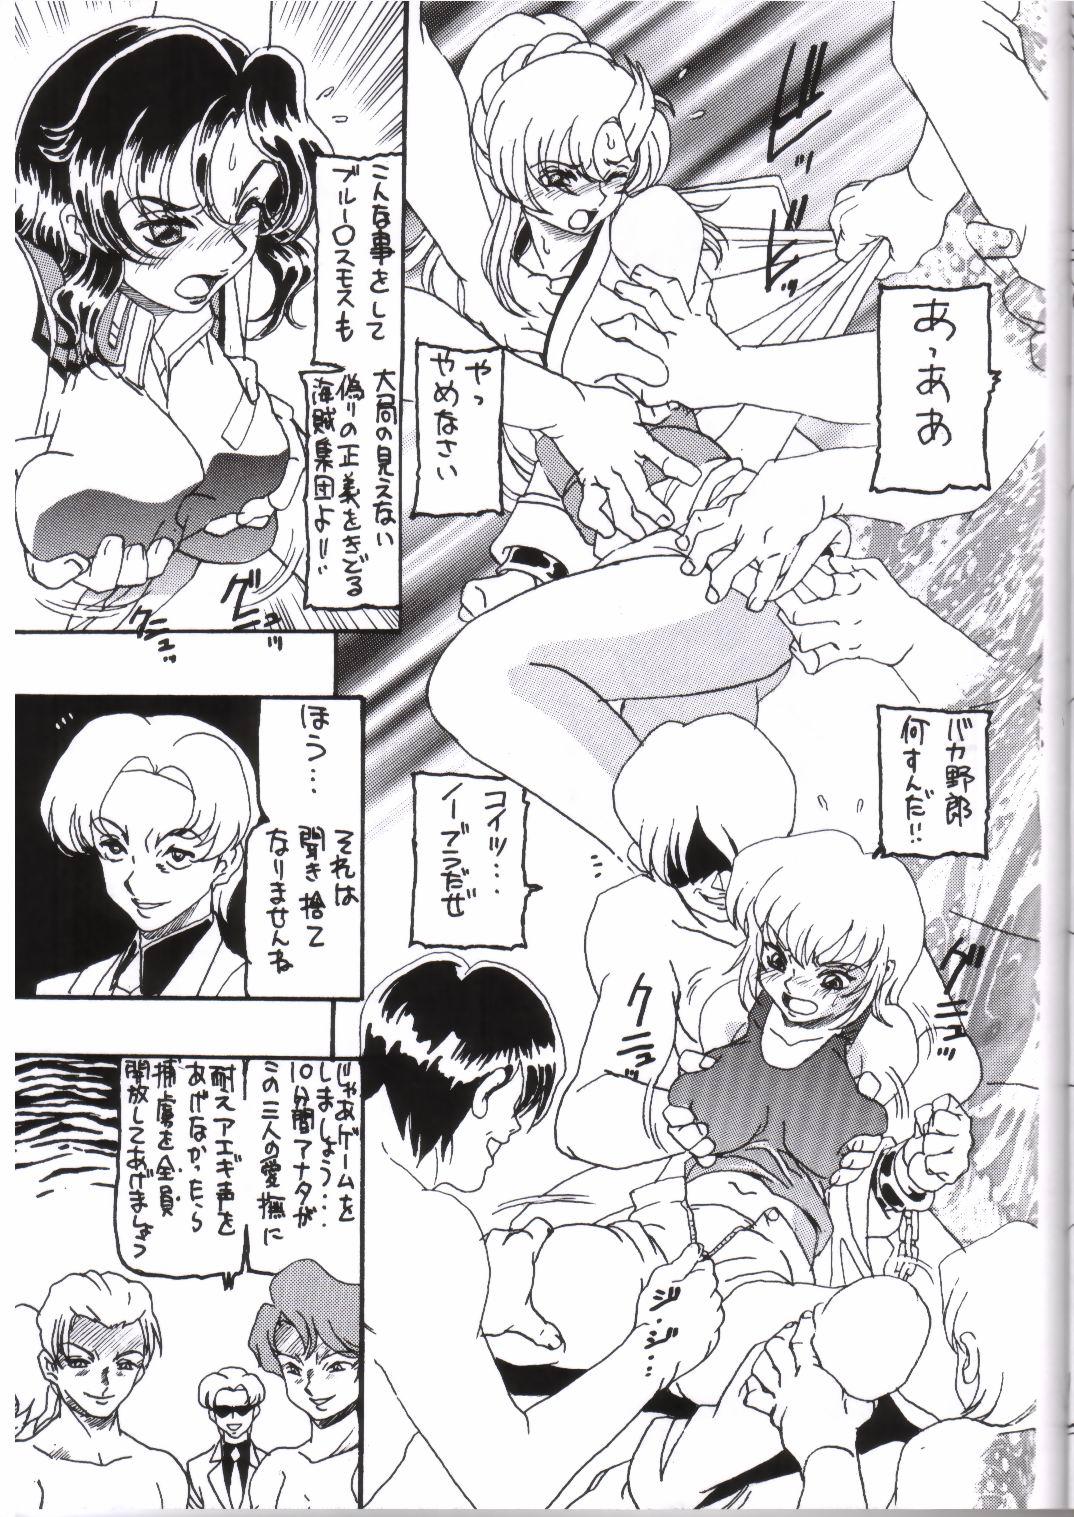 Clip Moon Shine 9 - Gundam seed Letsdoeit - Page 8